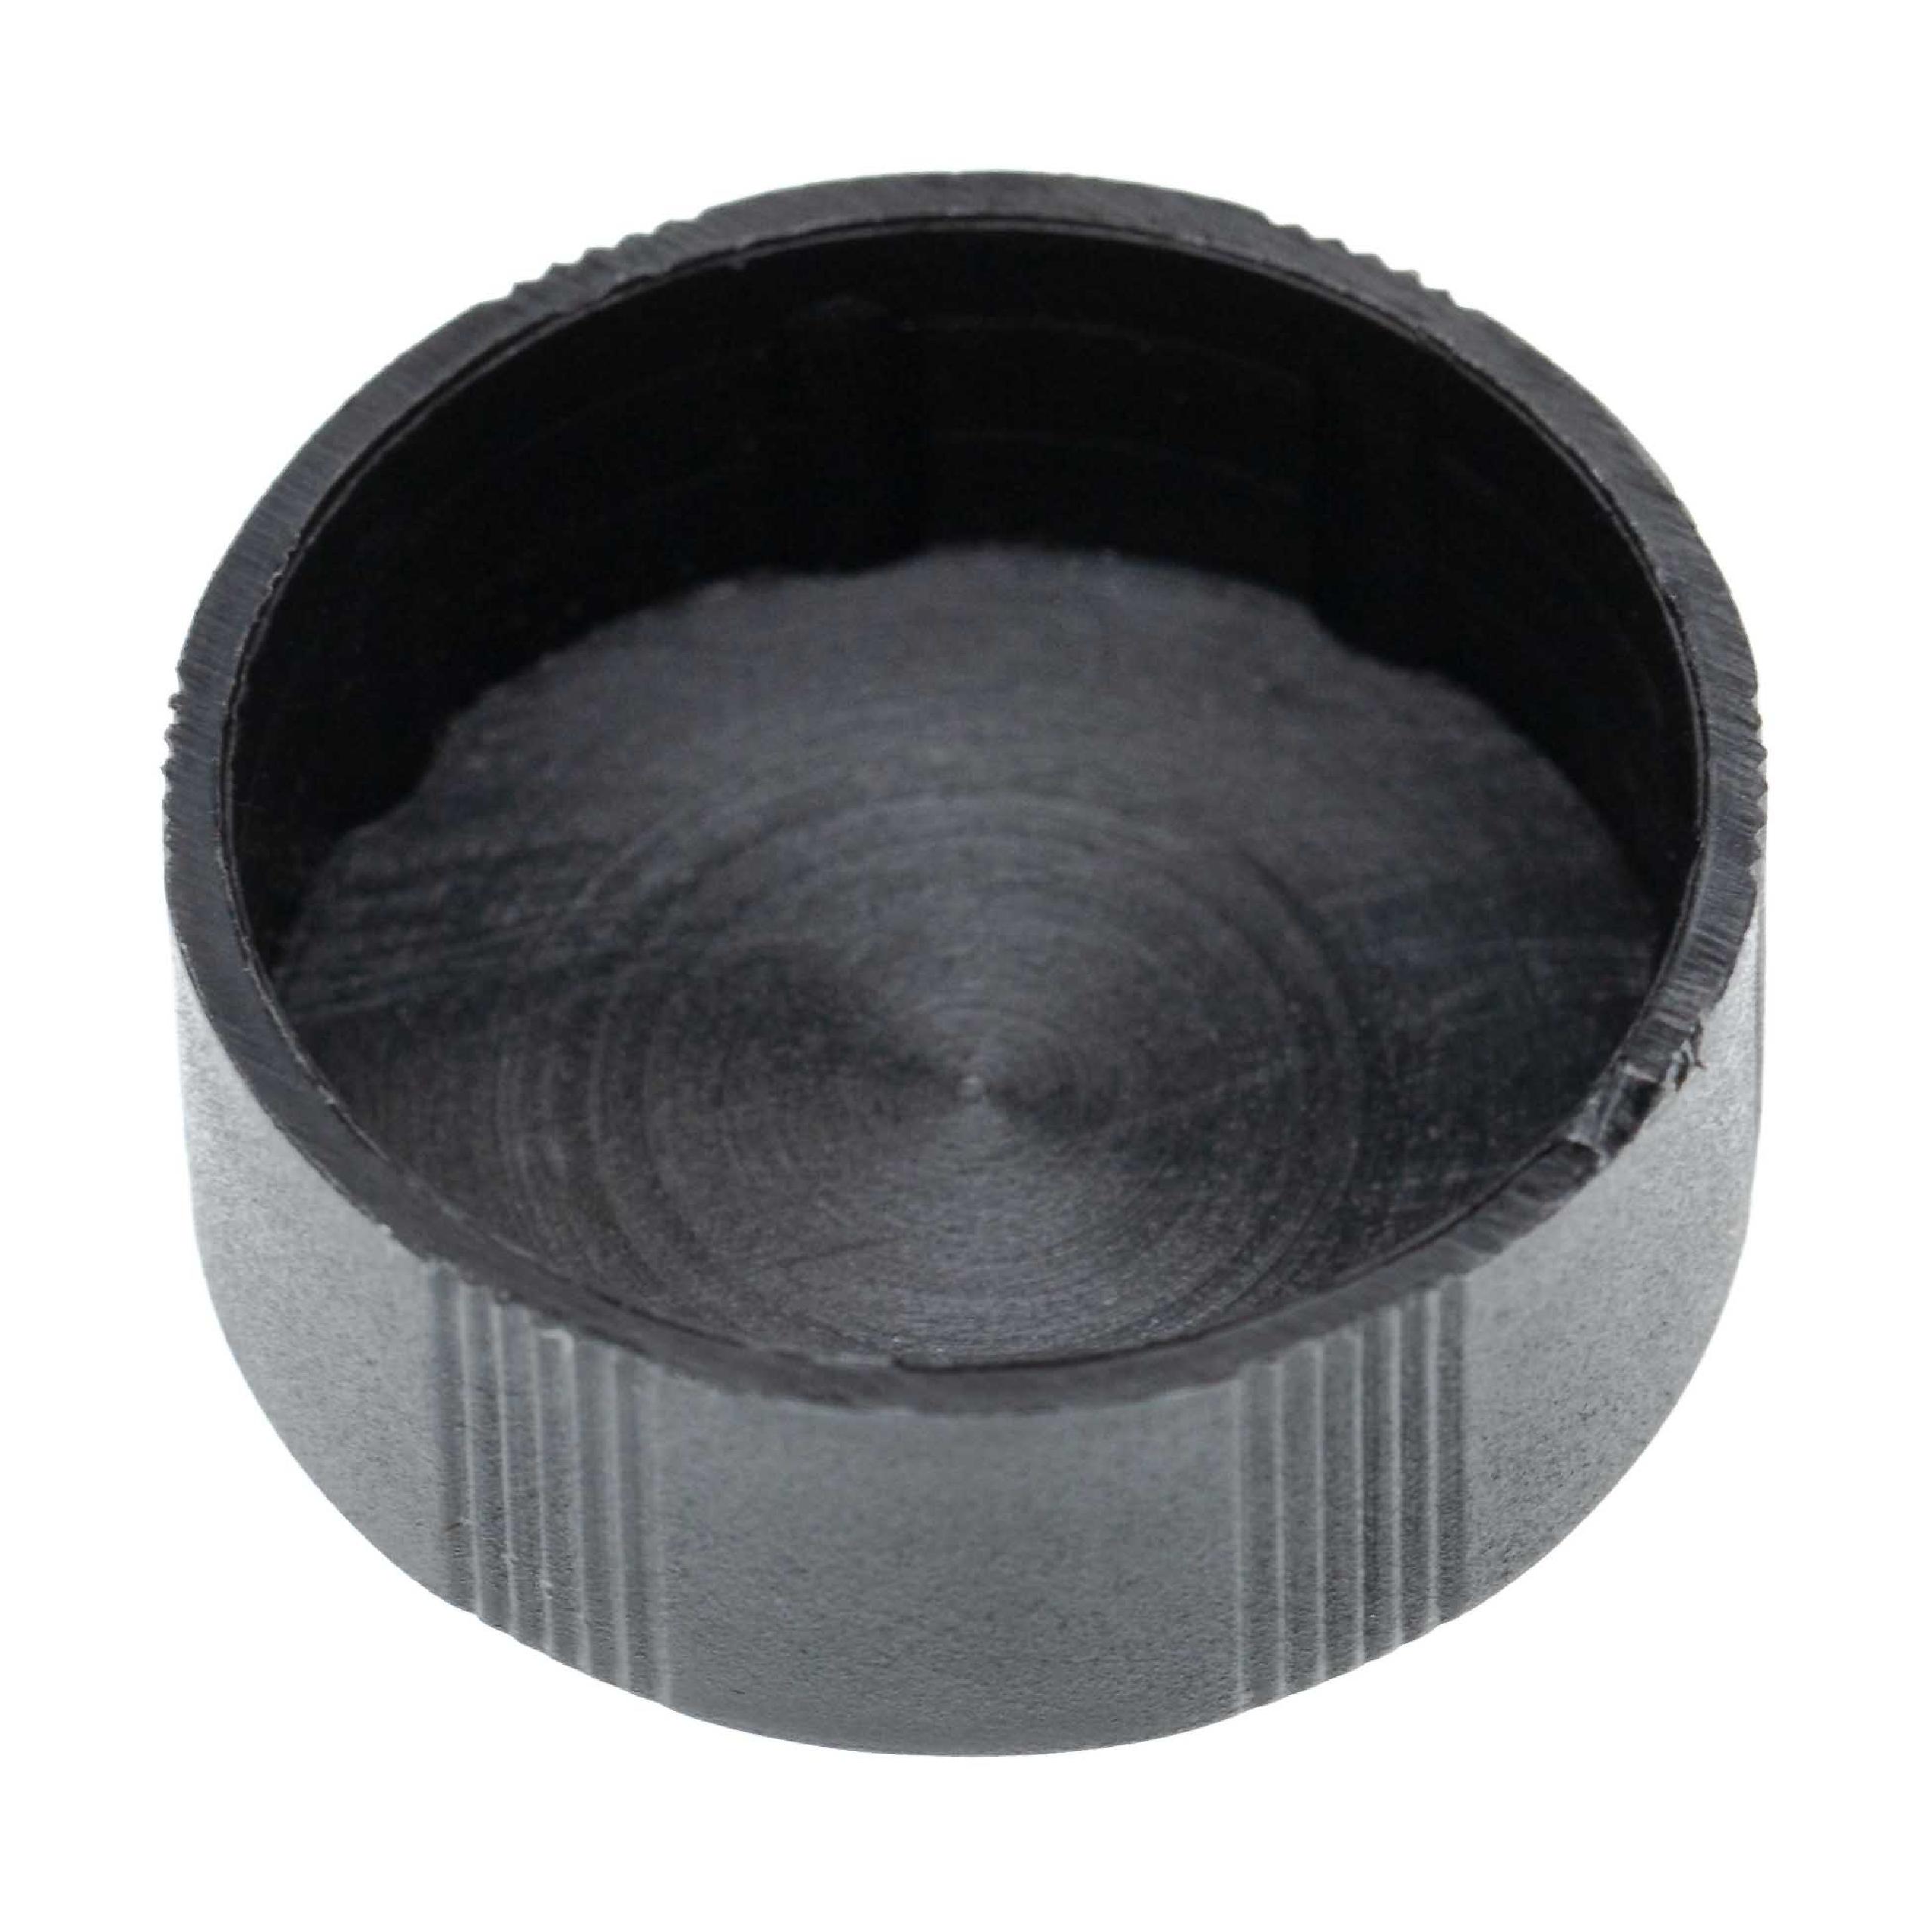 Tapa objetivo para prismáticos con diámetro de 30 mm - negro, acoplable